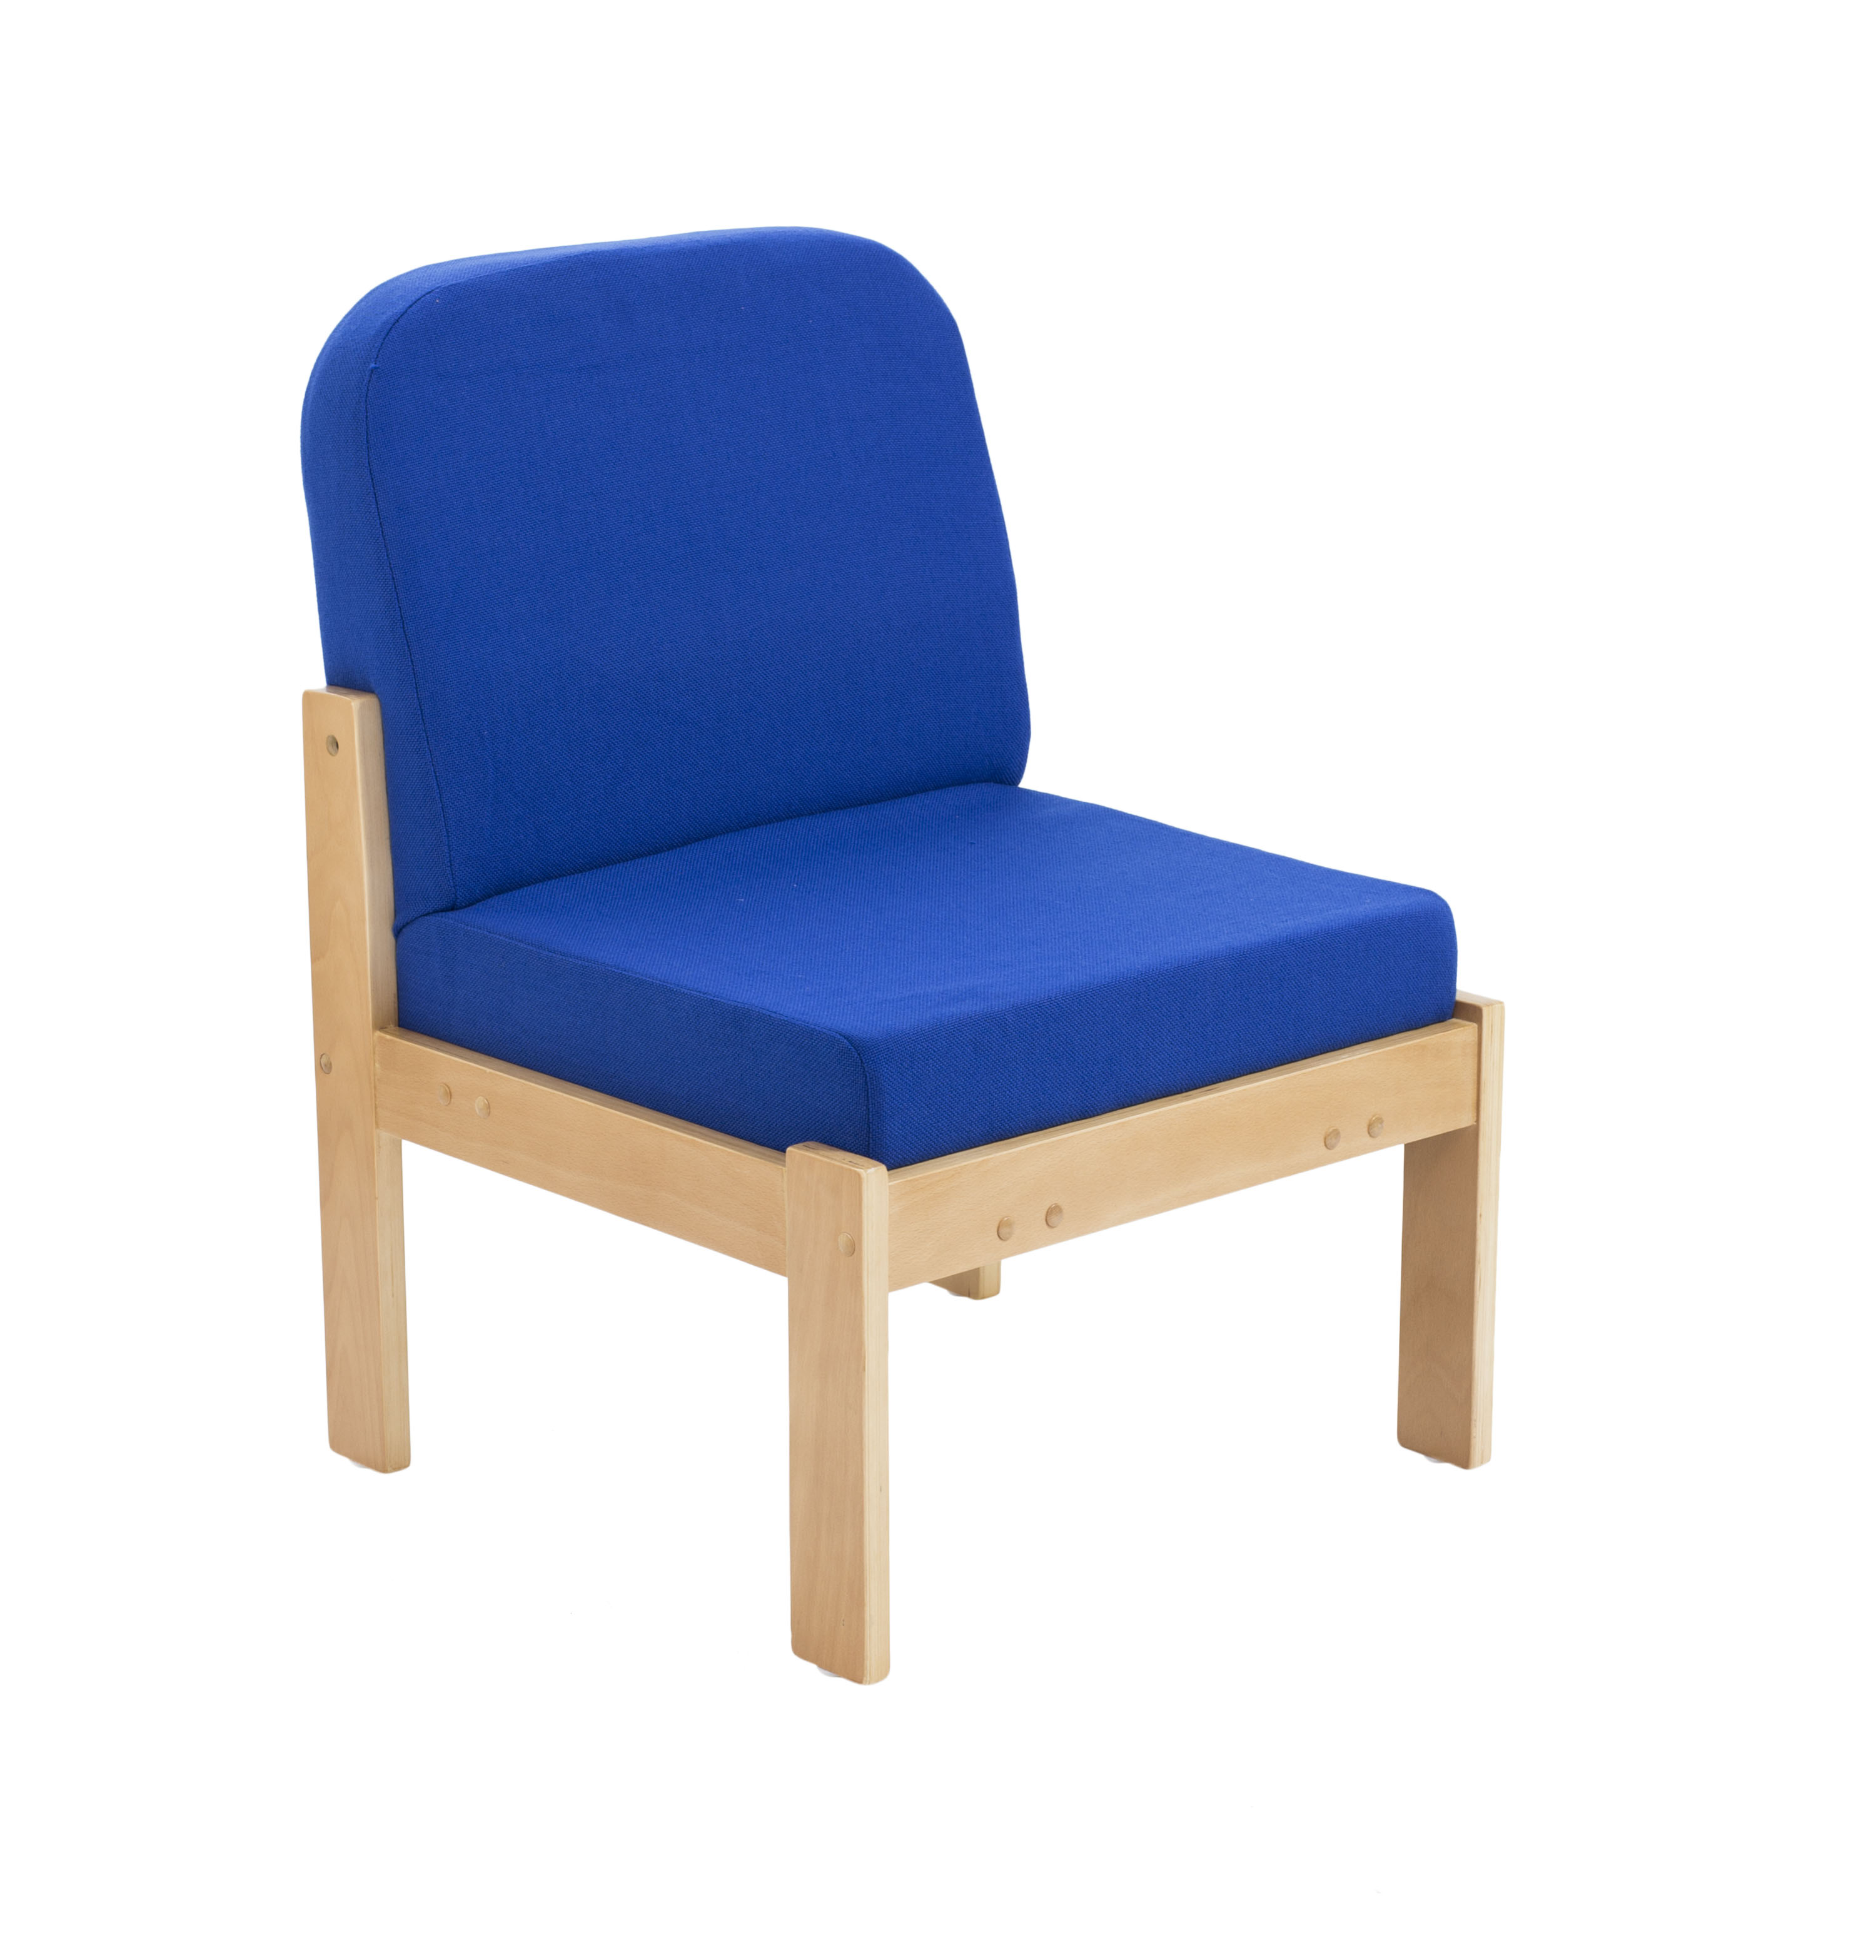 Juplo Side Chair - Royal Blue